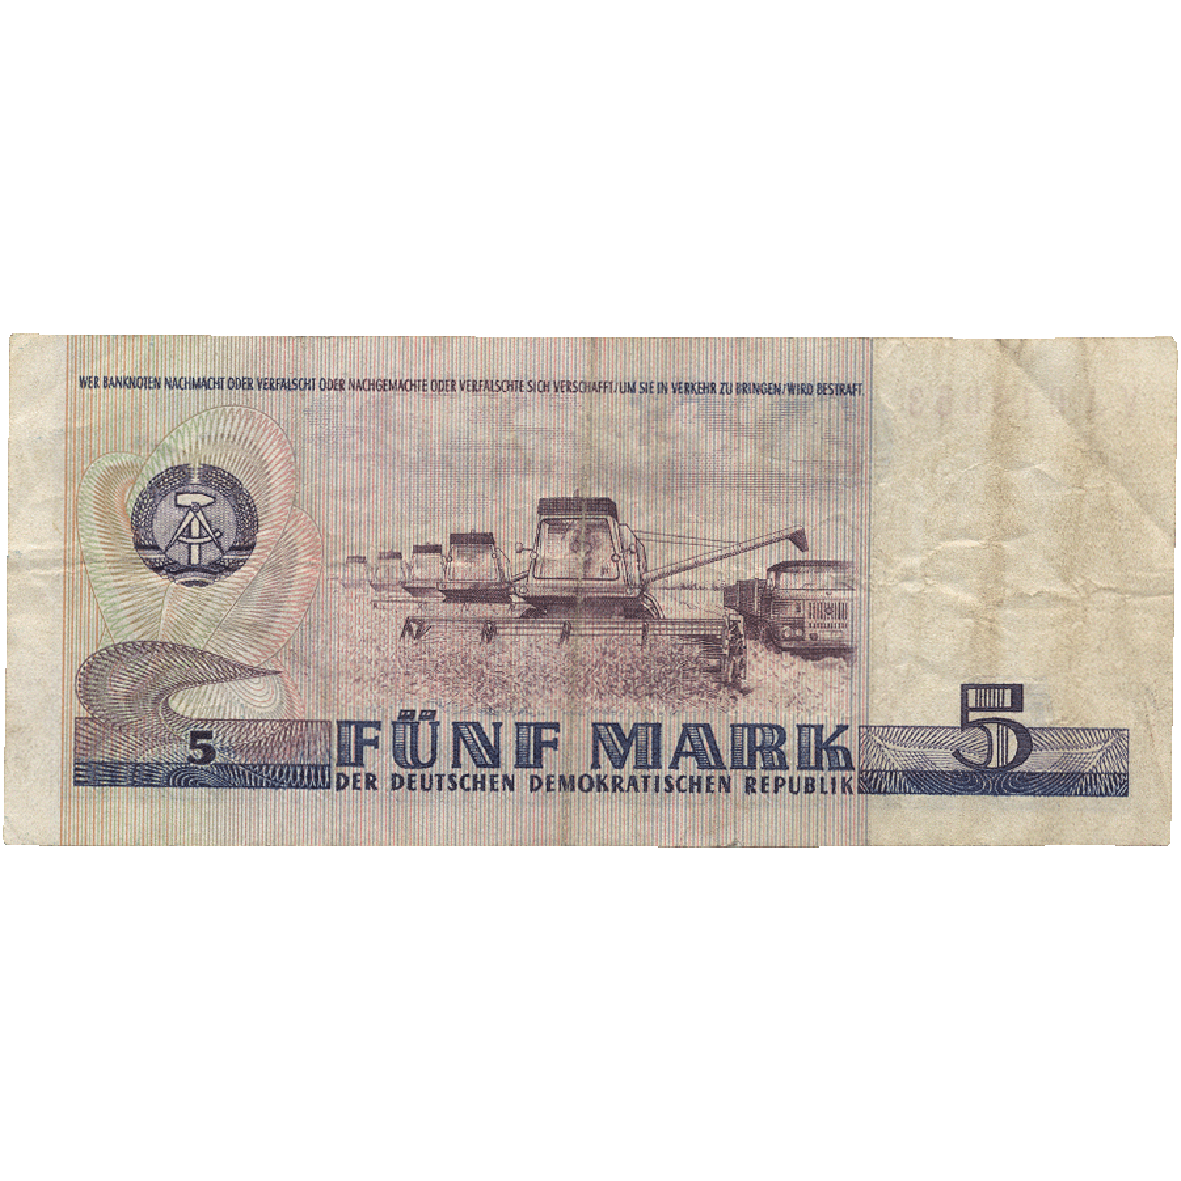 German Democratic Republic, 5 Mark 1975 (reverse)